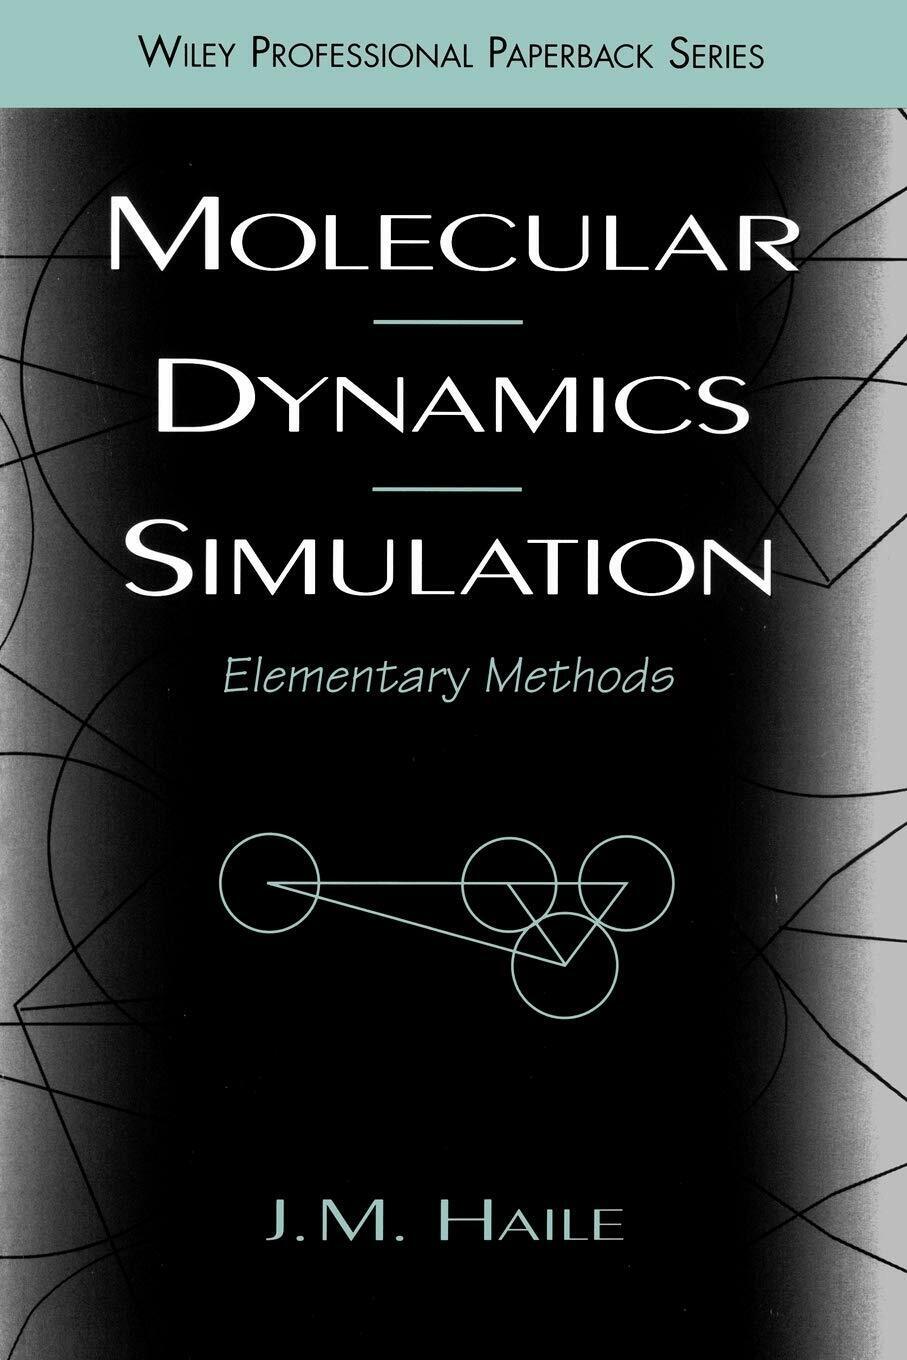 Simulation P: Elementary Methods - Haile - John Wiley & Sons, 1997